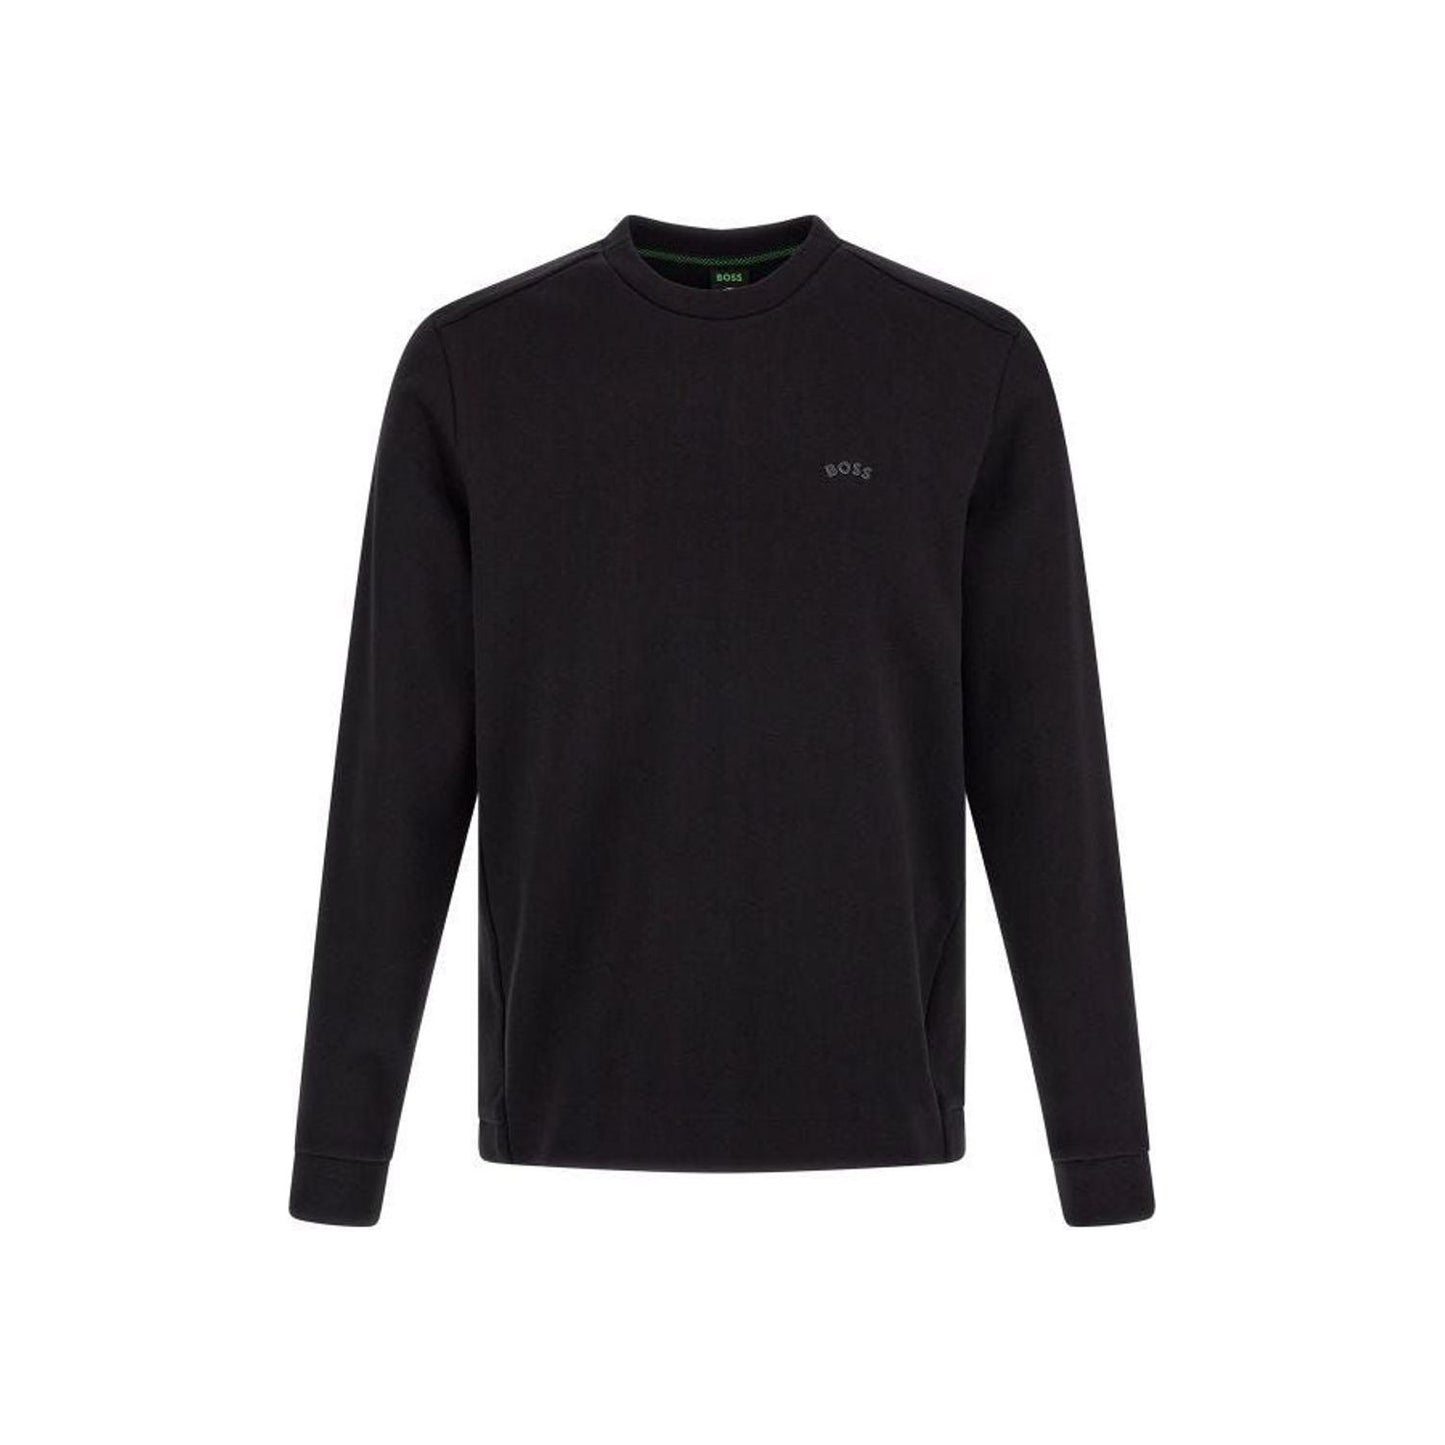 Hugo Boss Elegant Black Cotton Round Neck Sweatshirt black-cotton-logo-details-sweatshirt 50474192-001-687913e1-60d.jpg